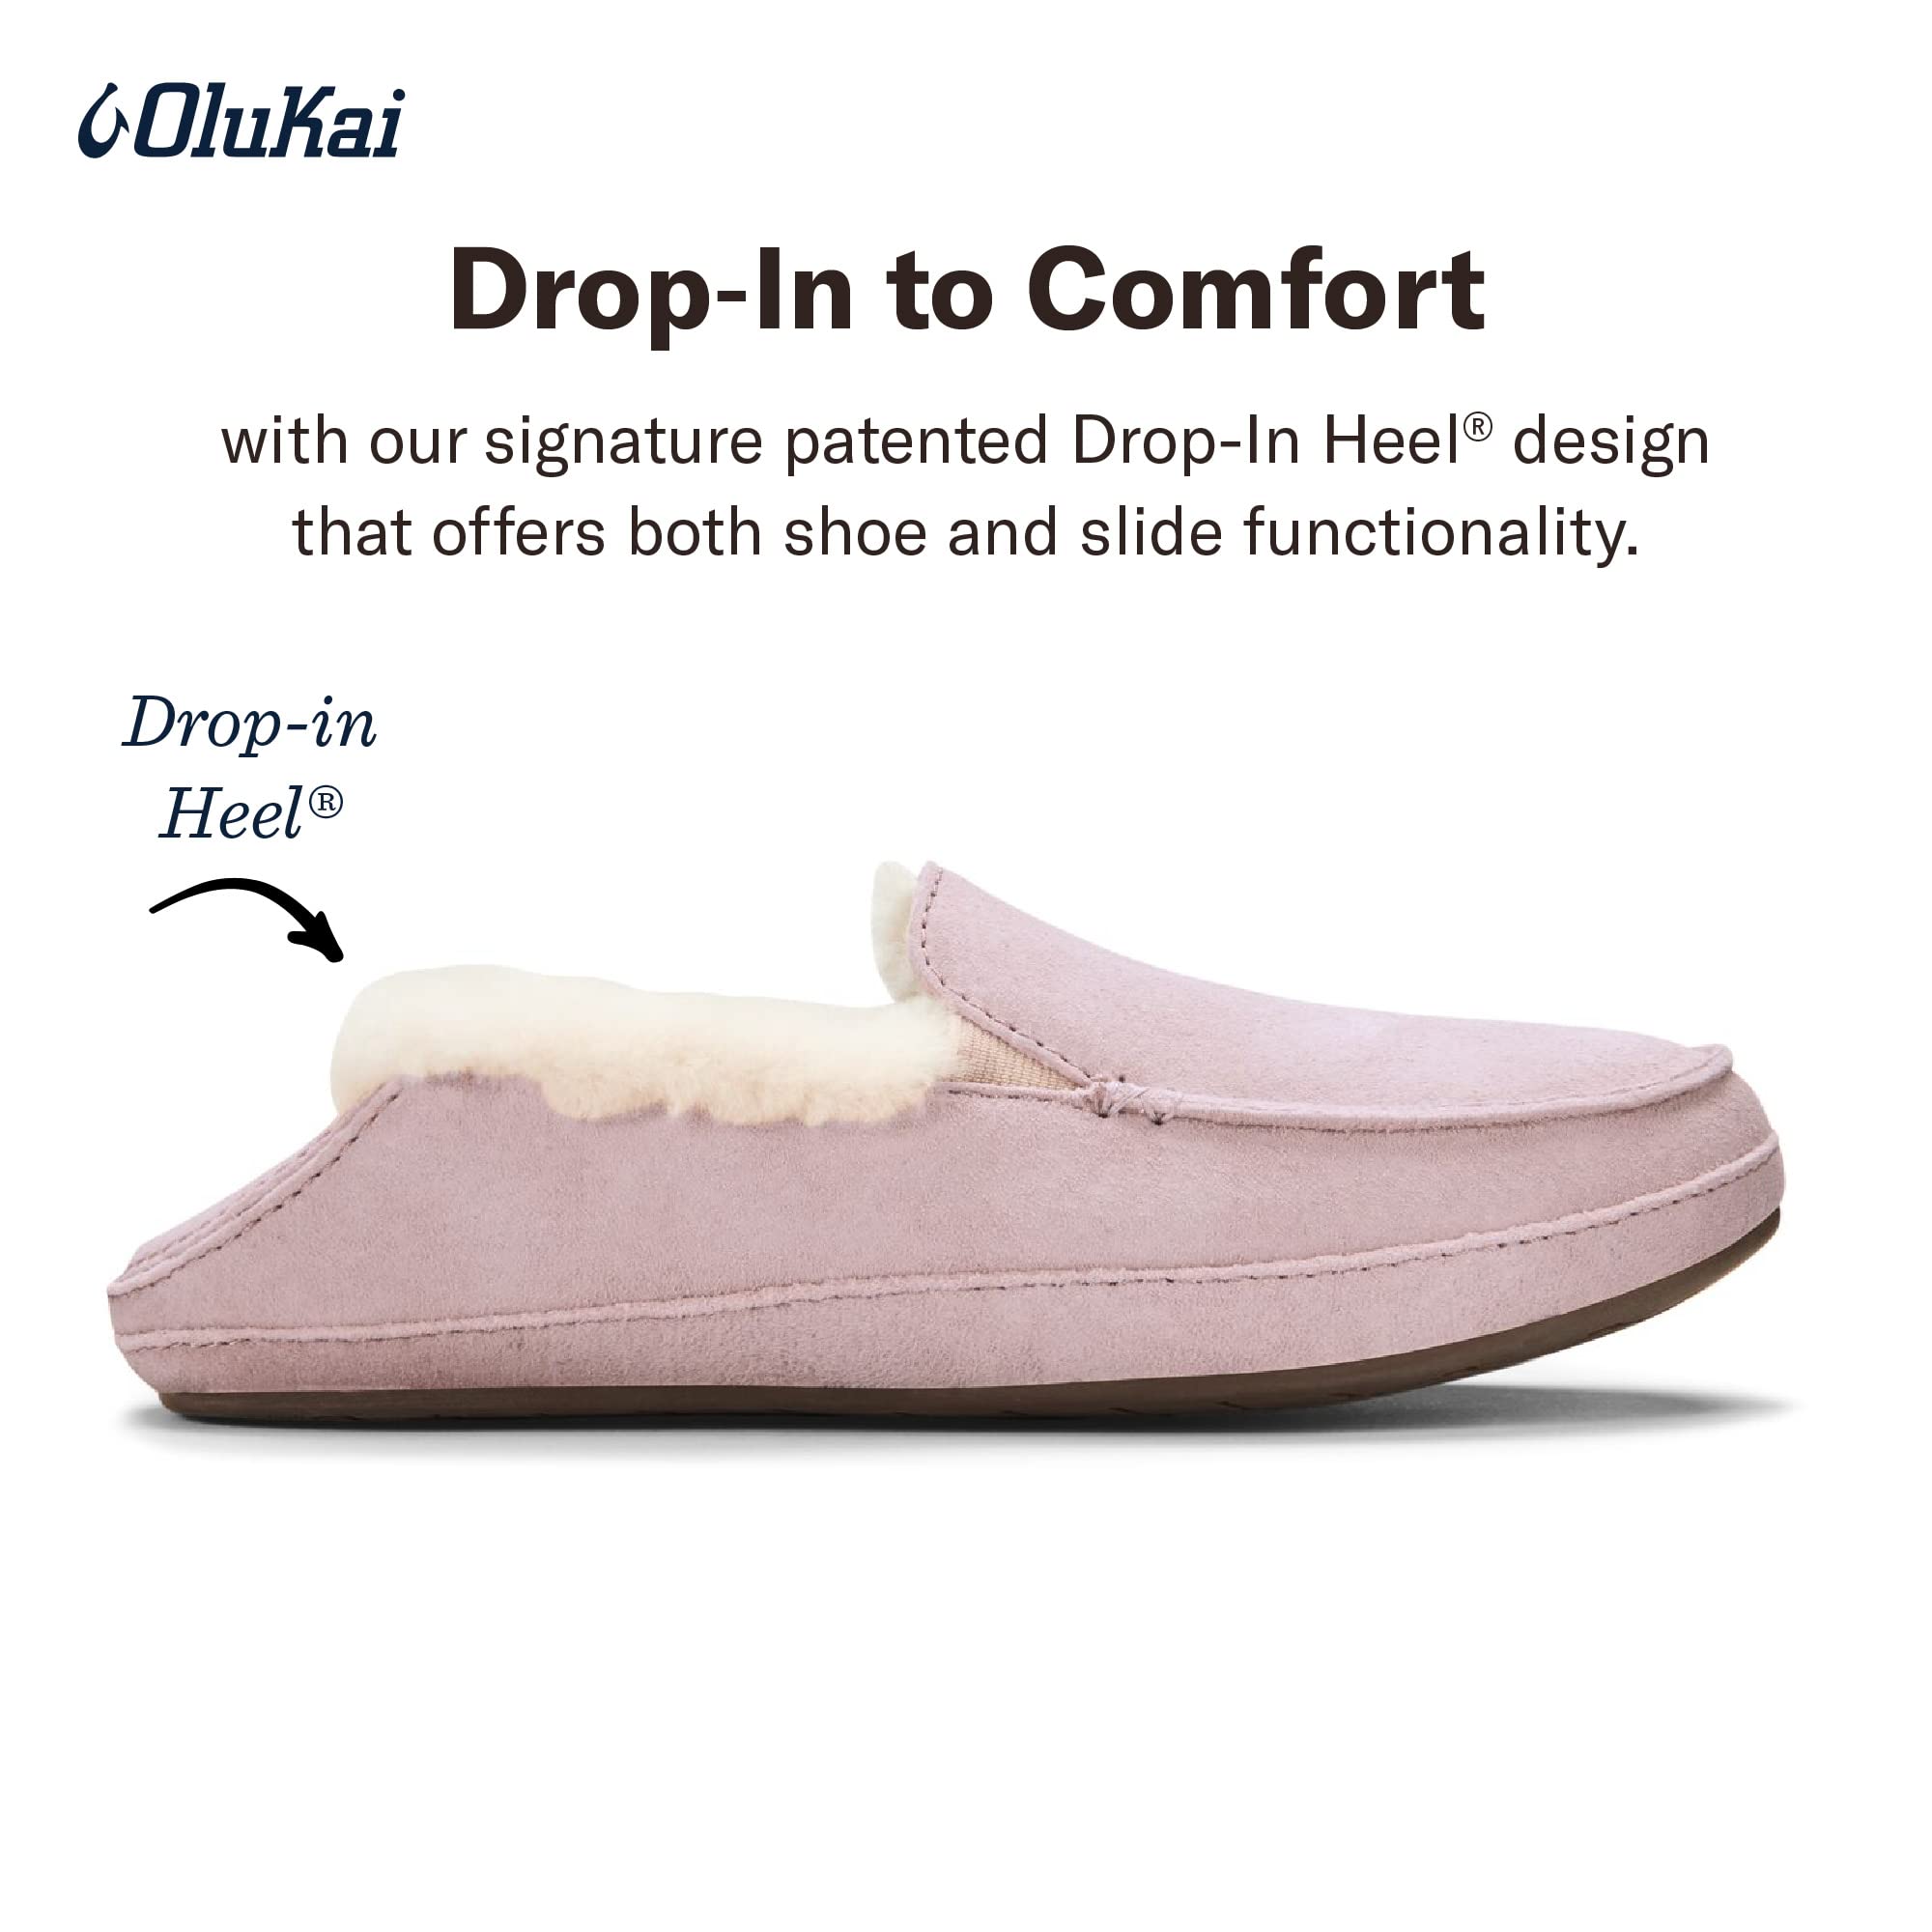 OLUKAI Ku'una Slipper, Women's Slip-On Shoes, Genuine Shearling & Premium Nubuck Leather, Drop-In Heel Design, Cozy & Ultra-Soft Comfort Fit